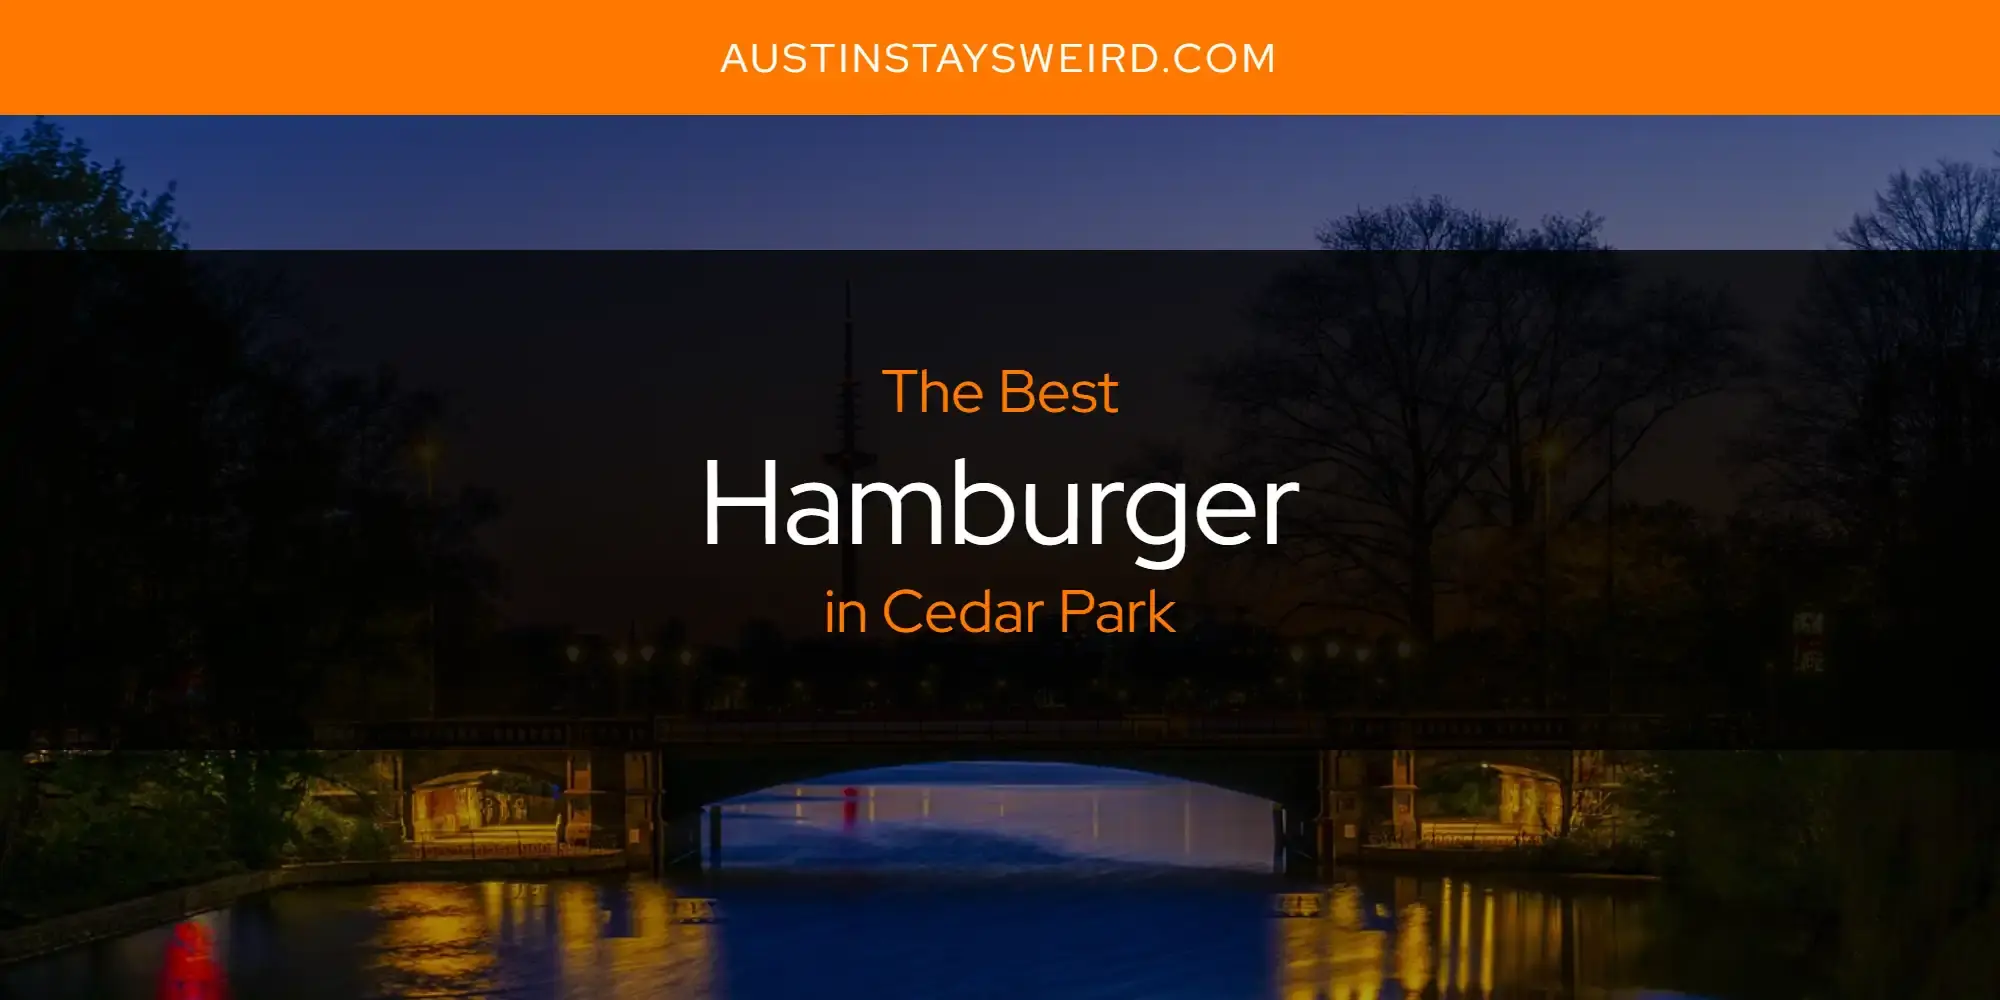 Best Hamburger in Cedar Park? Here's the Top 8